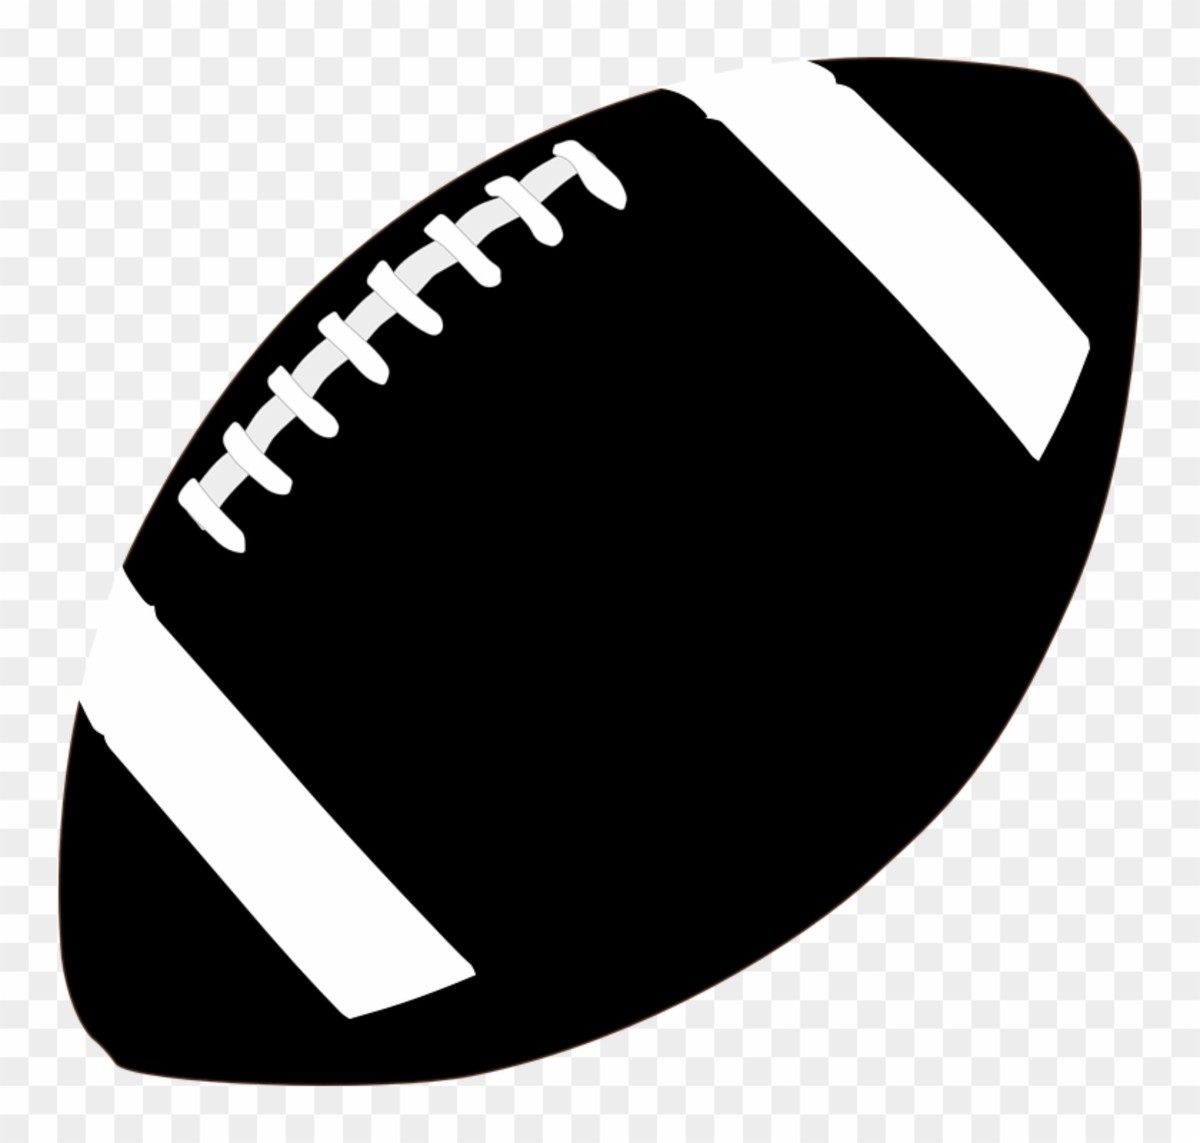 Generic football logo